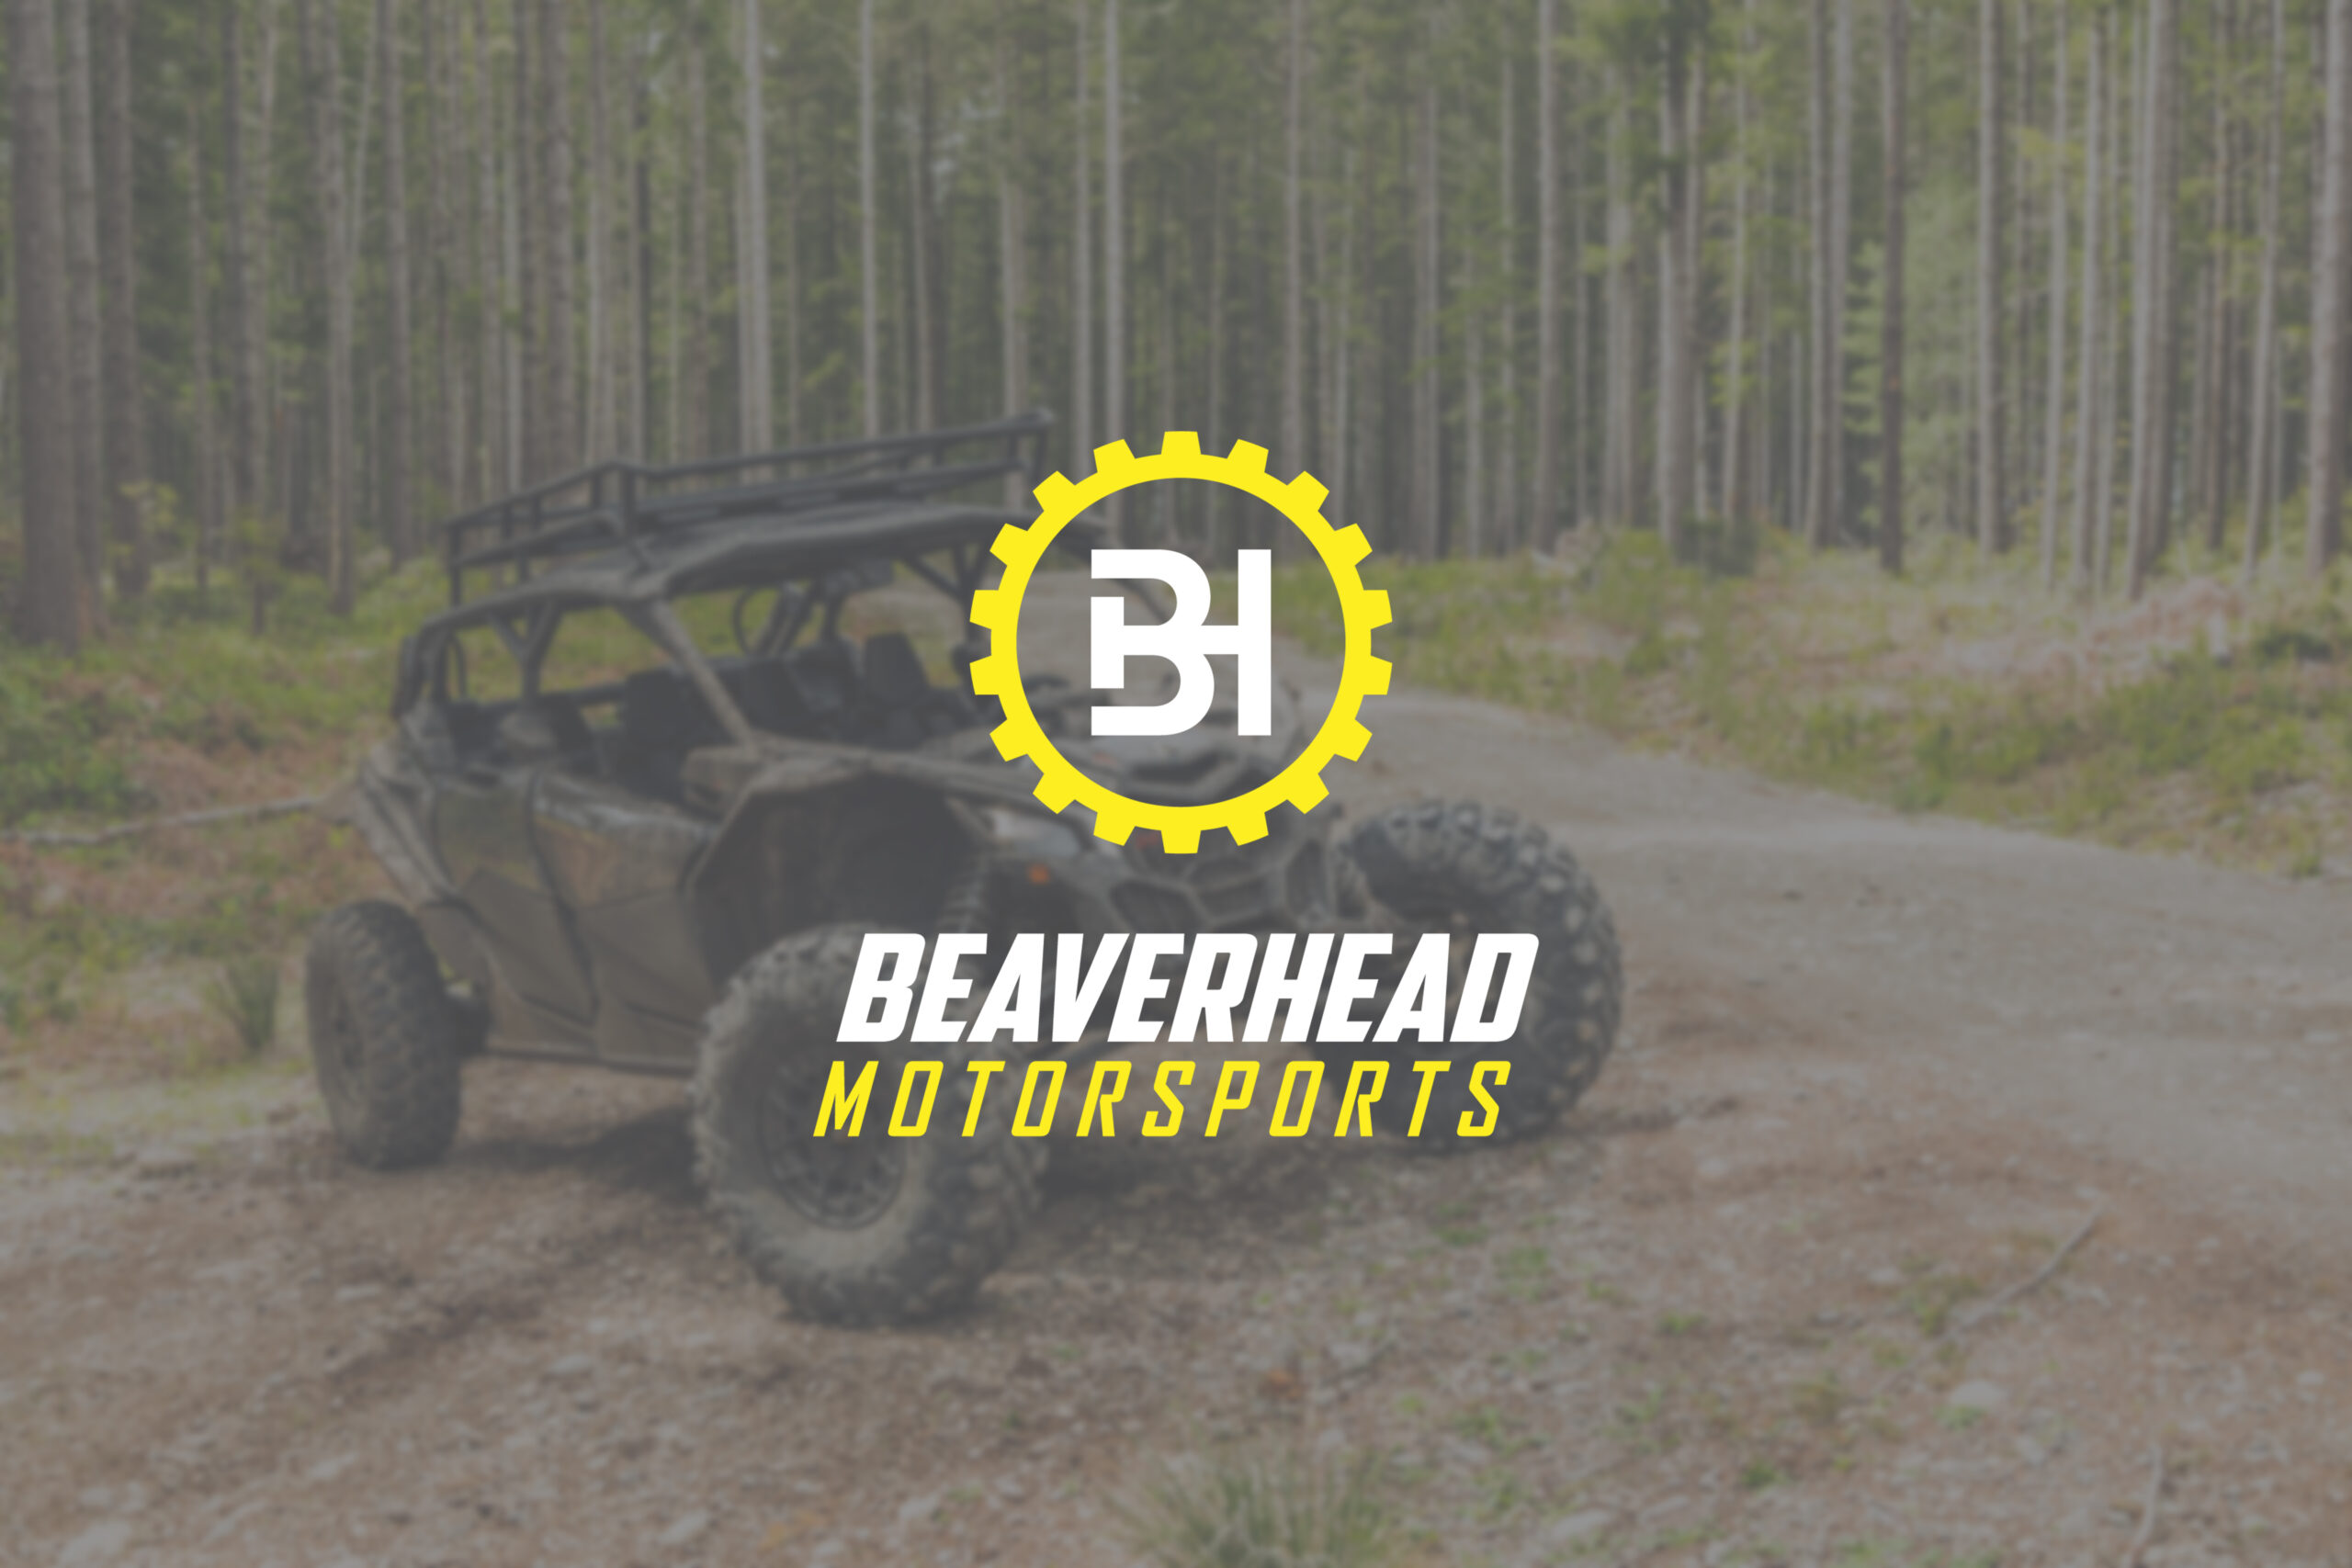 Case Study: Beaverhead Motorsports